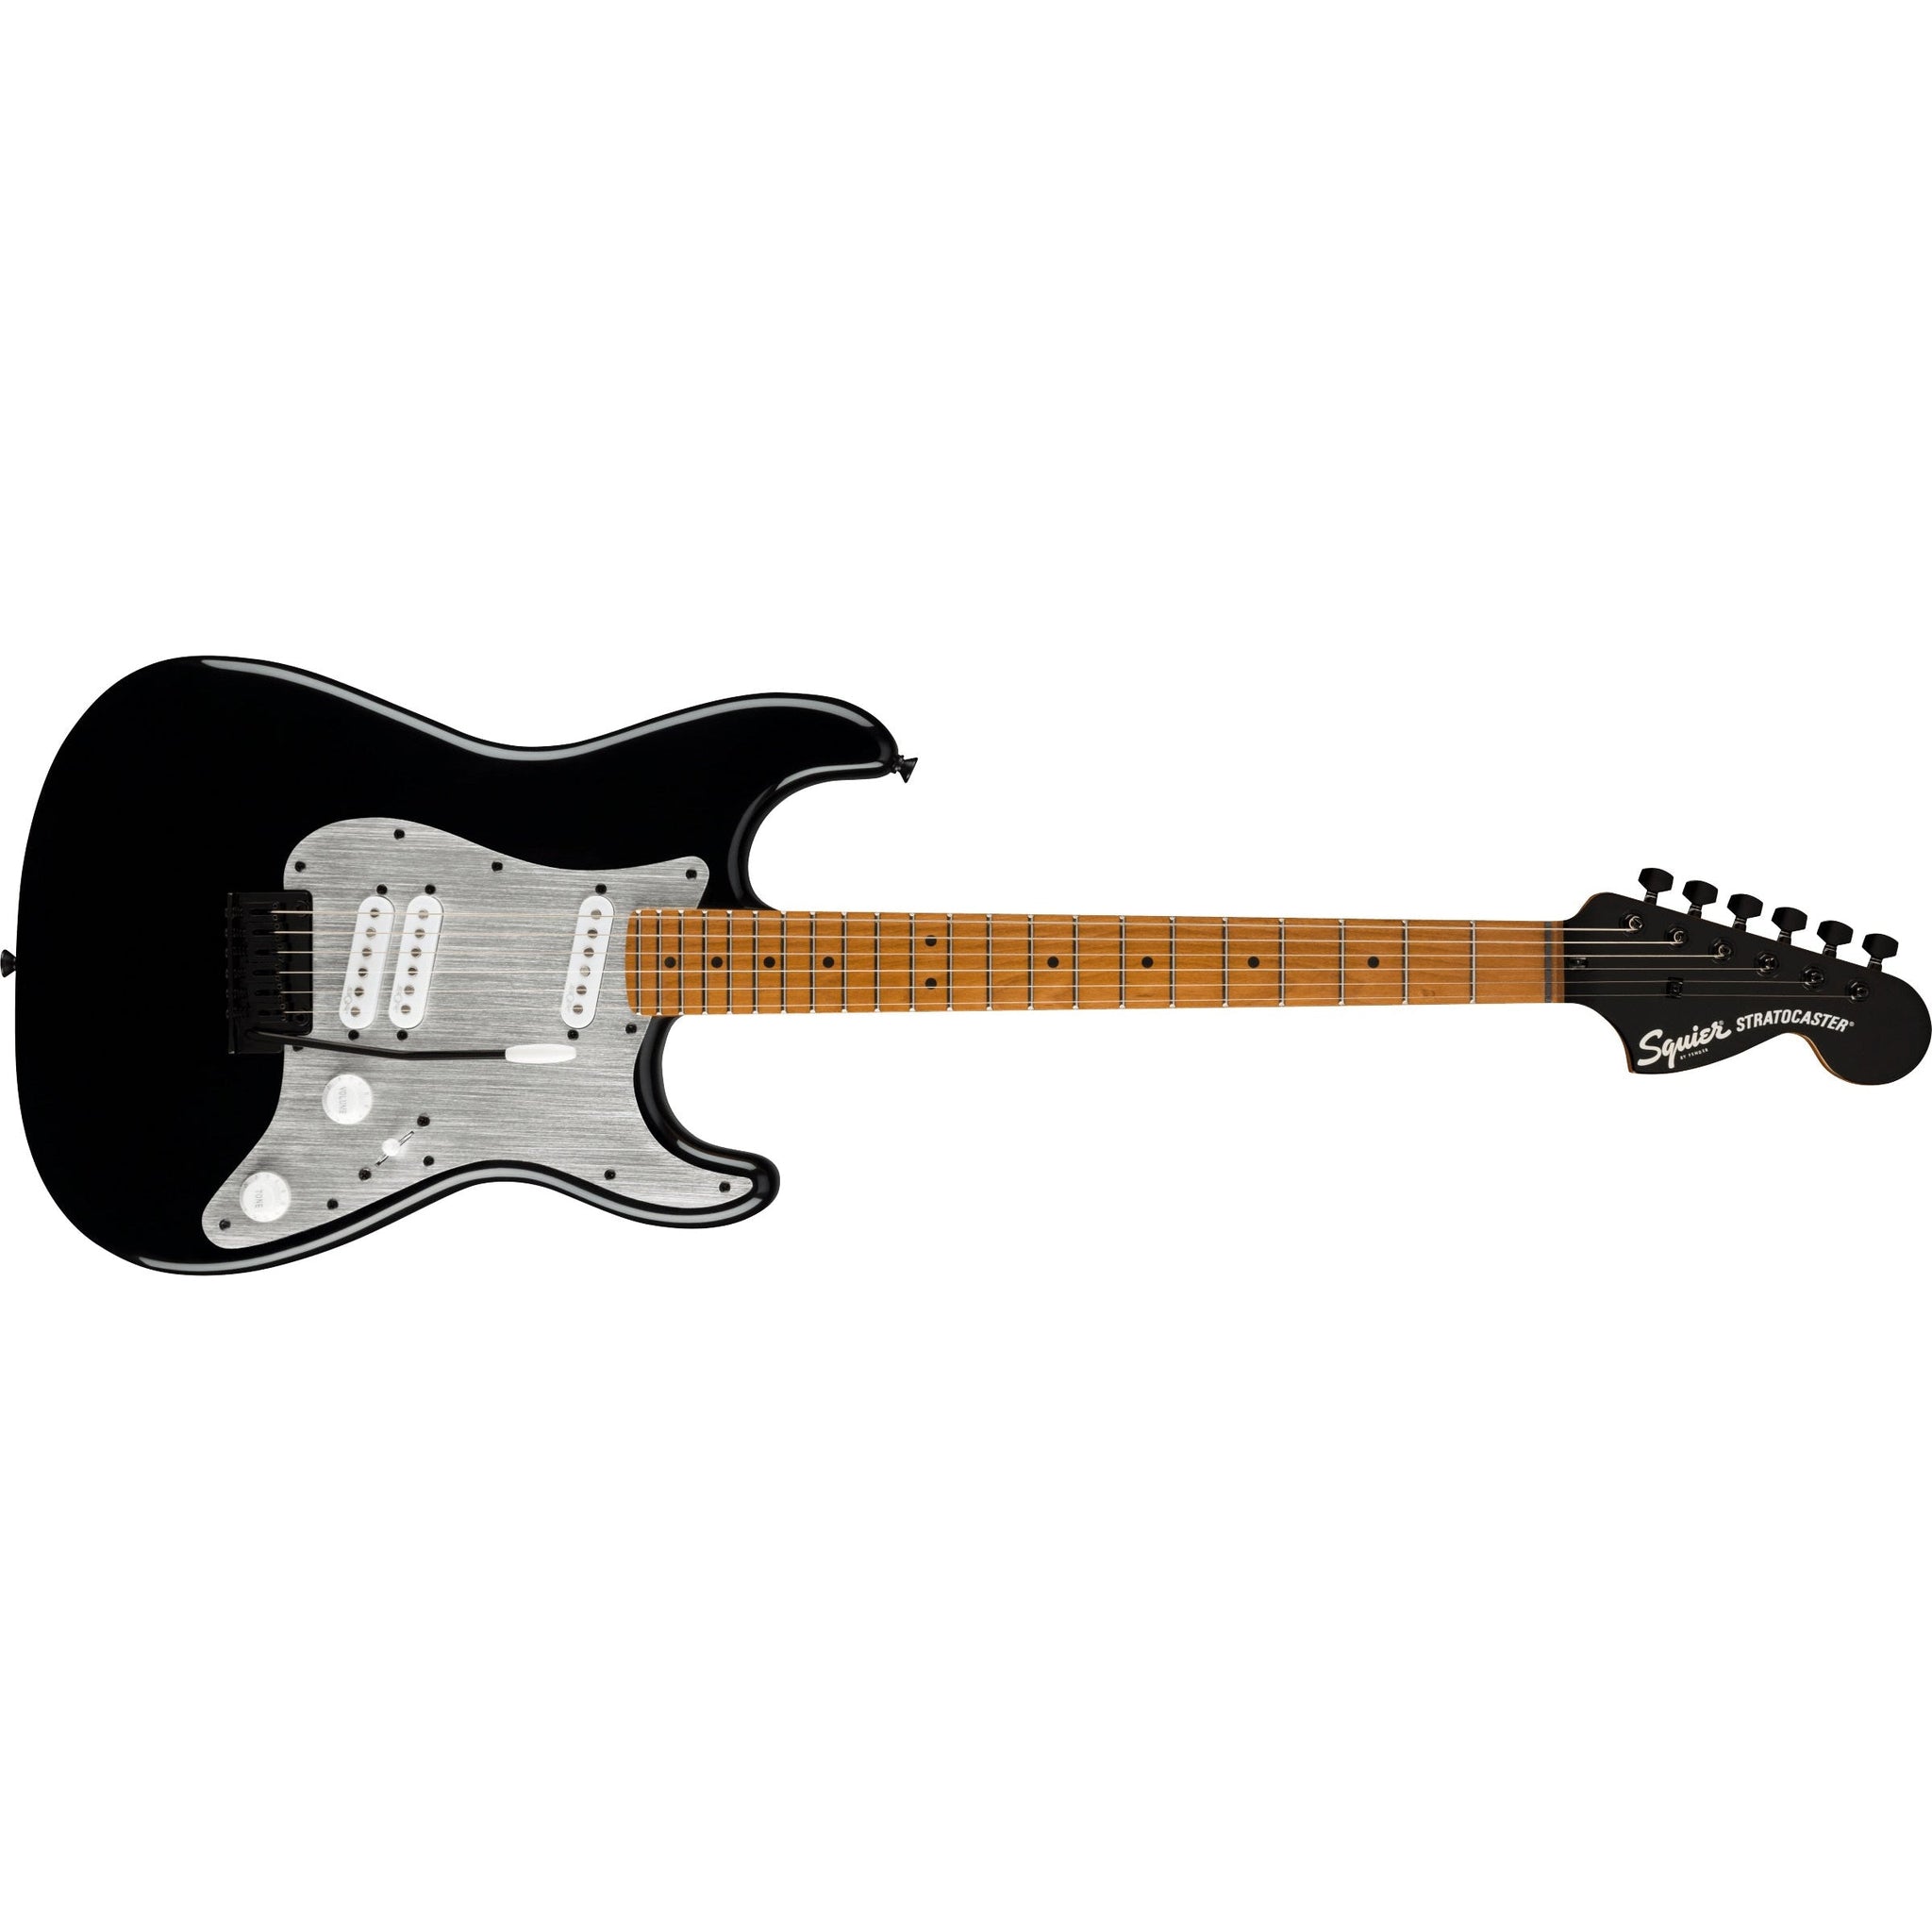 Fender Squier Contemporary Stratocaster Special Electric Guitar-Black-Music World Academy